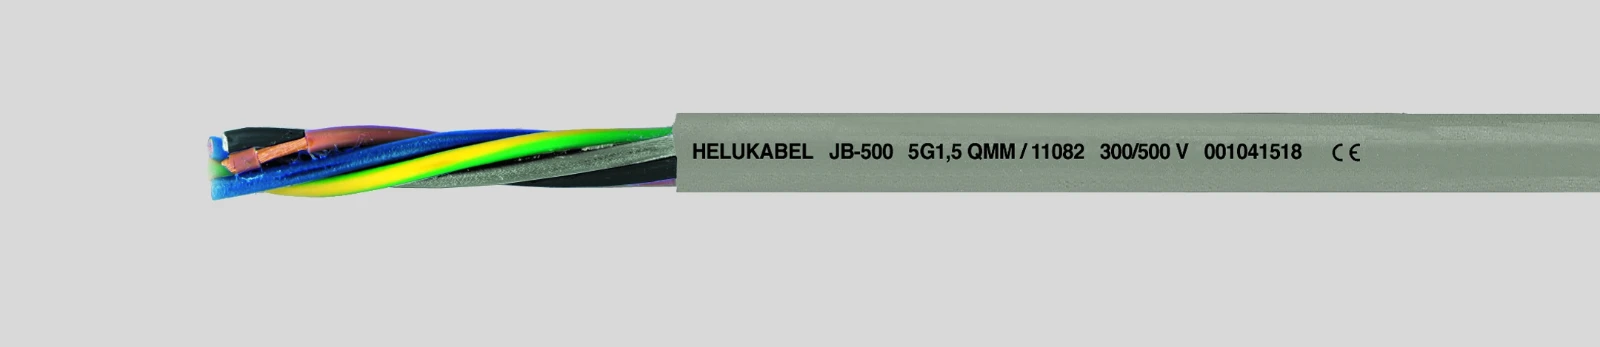 Helukabel Voedingskabel < 1 kV, voor beweegbare toepassingen JB-500